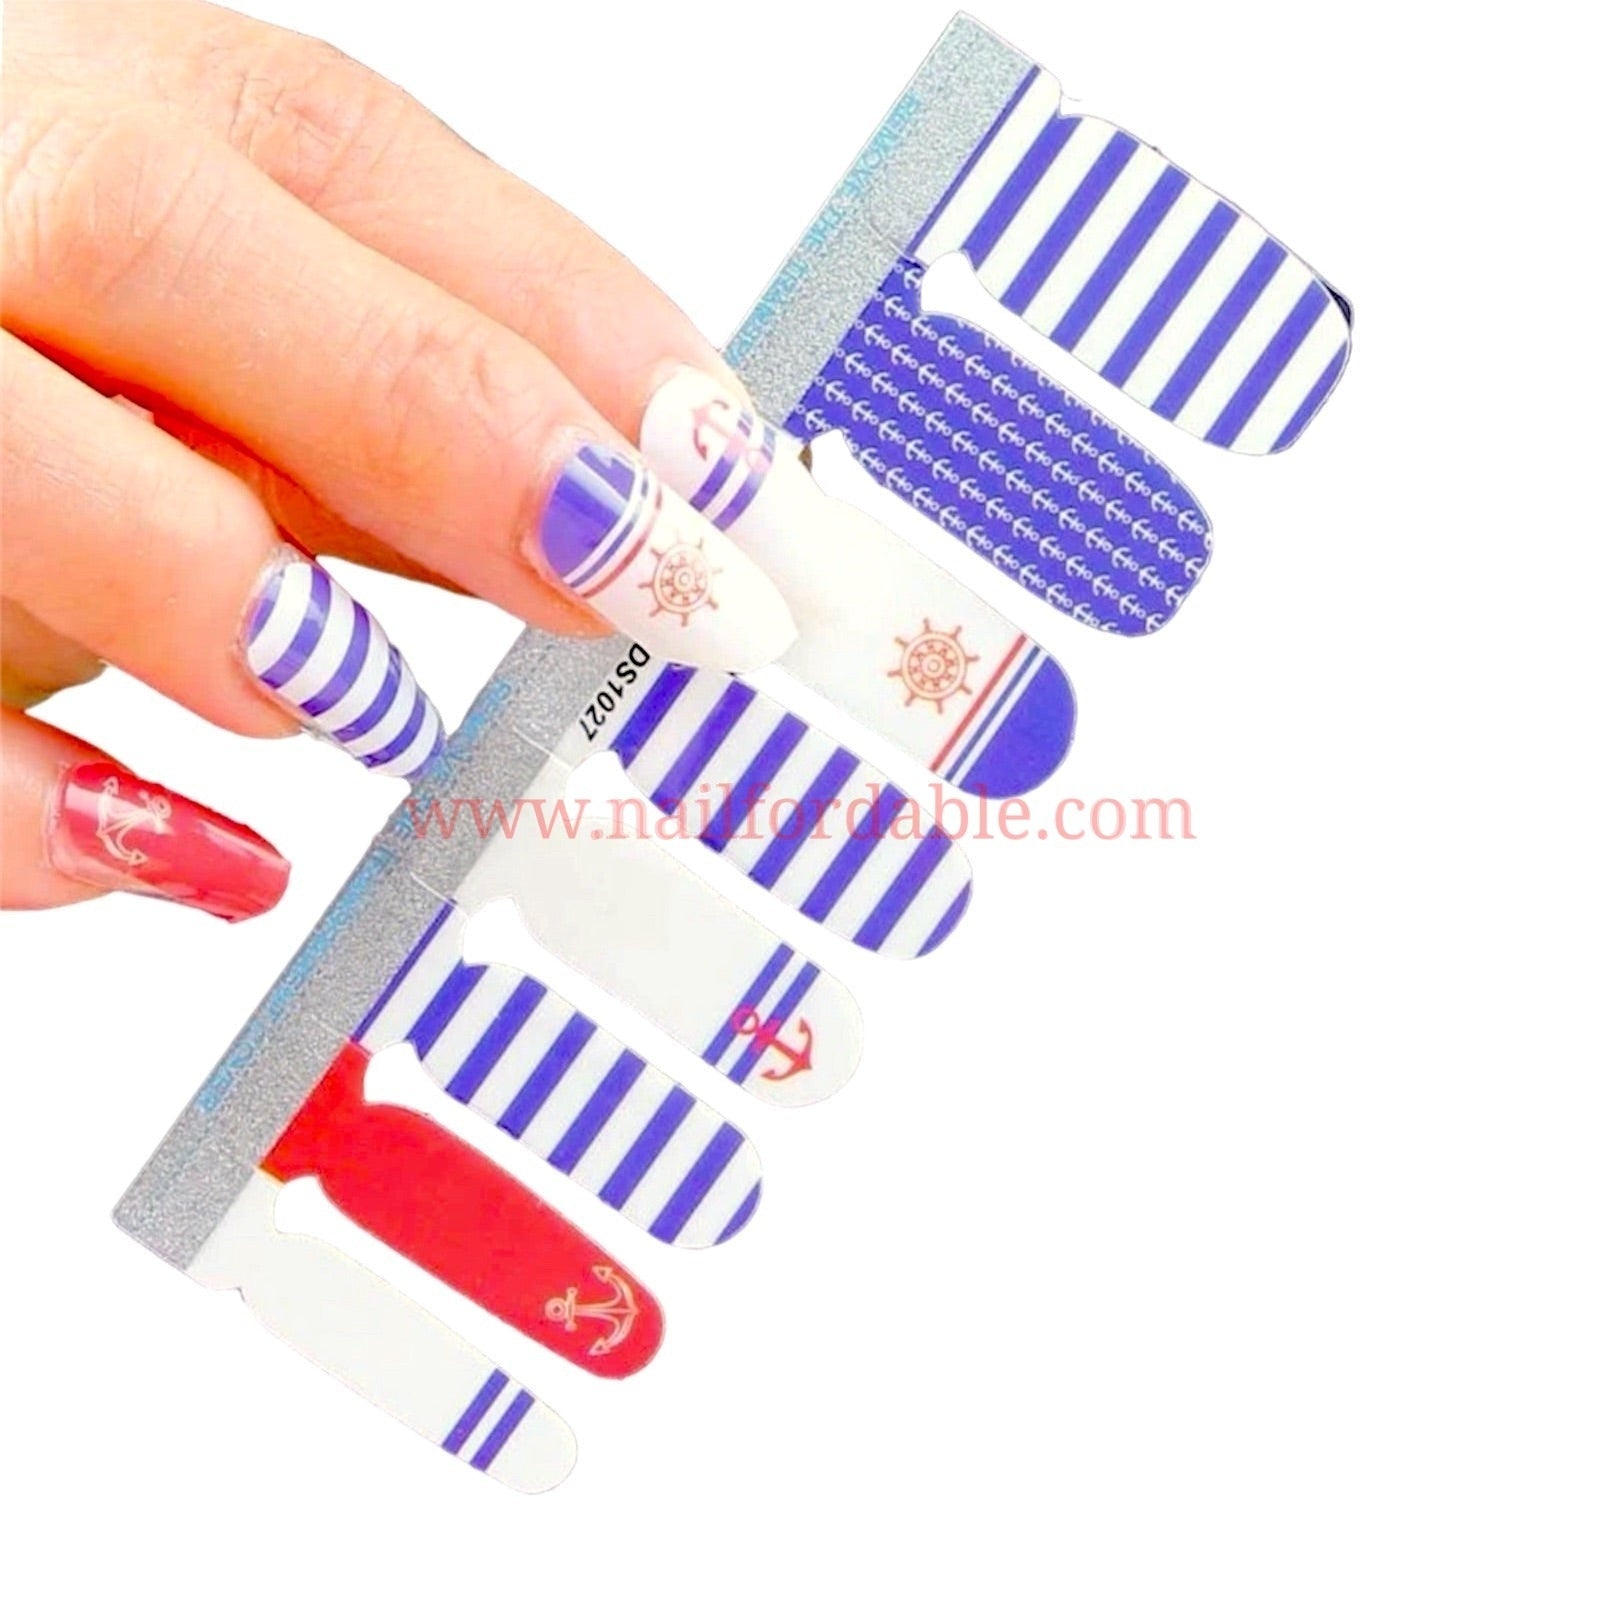 Anchors Nail Wraps | Semi Cured Gel Wraps | Gel Nail Wraps |Nail Polish | Nail Stickers